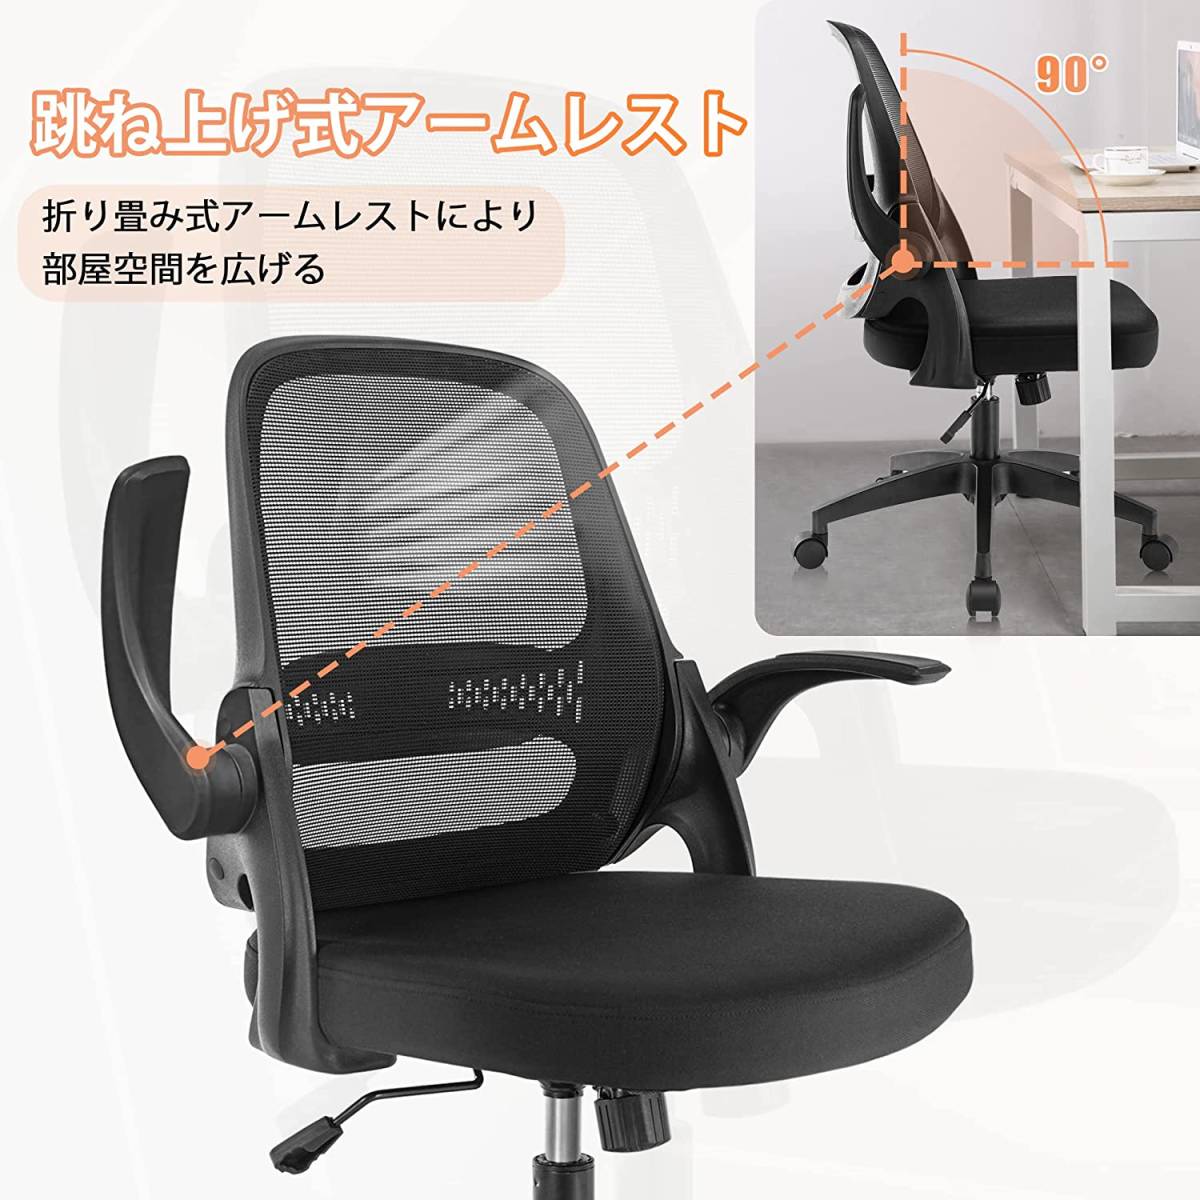 FelixKing オフィスチェア デスクチェア 椅子 テレワーク メッシュ 通気性 座面昇降 跳ね上げ式アームレスト コンパクト 疲れない椅子 